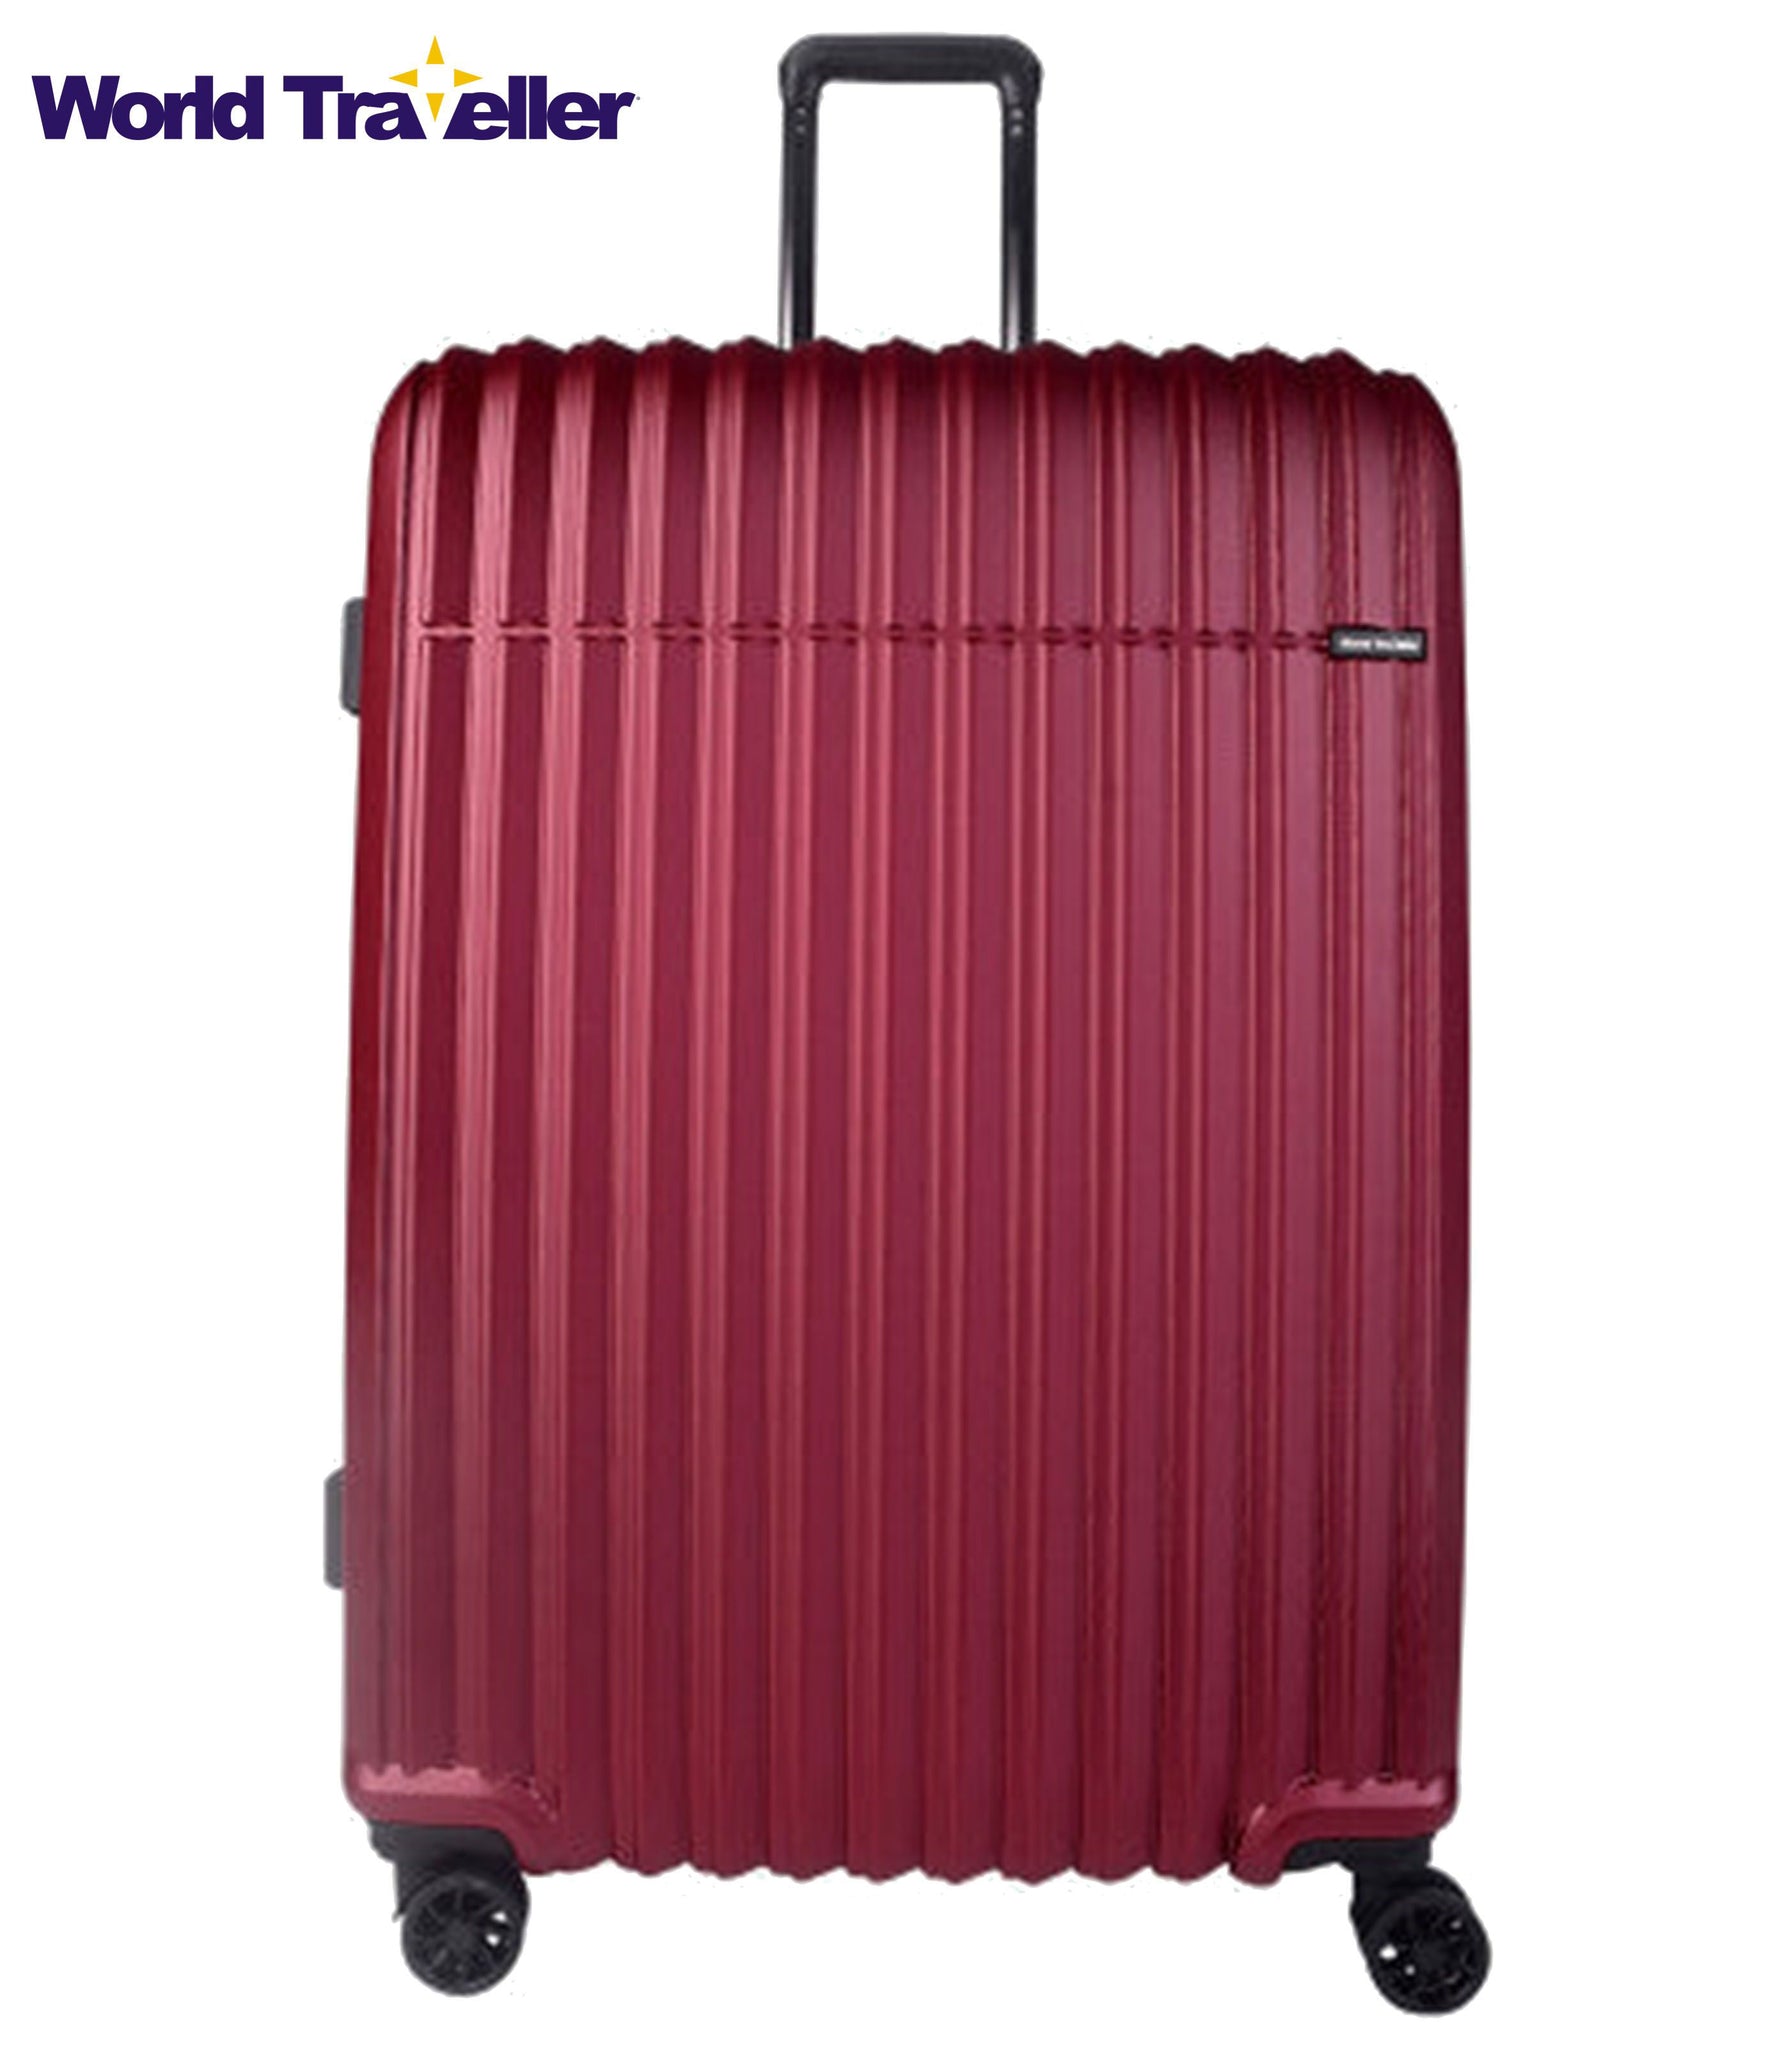 evoc World Traveller Travel Bag 125L Multicolour  401215900   Amazonin Fashion